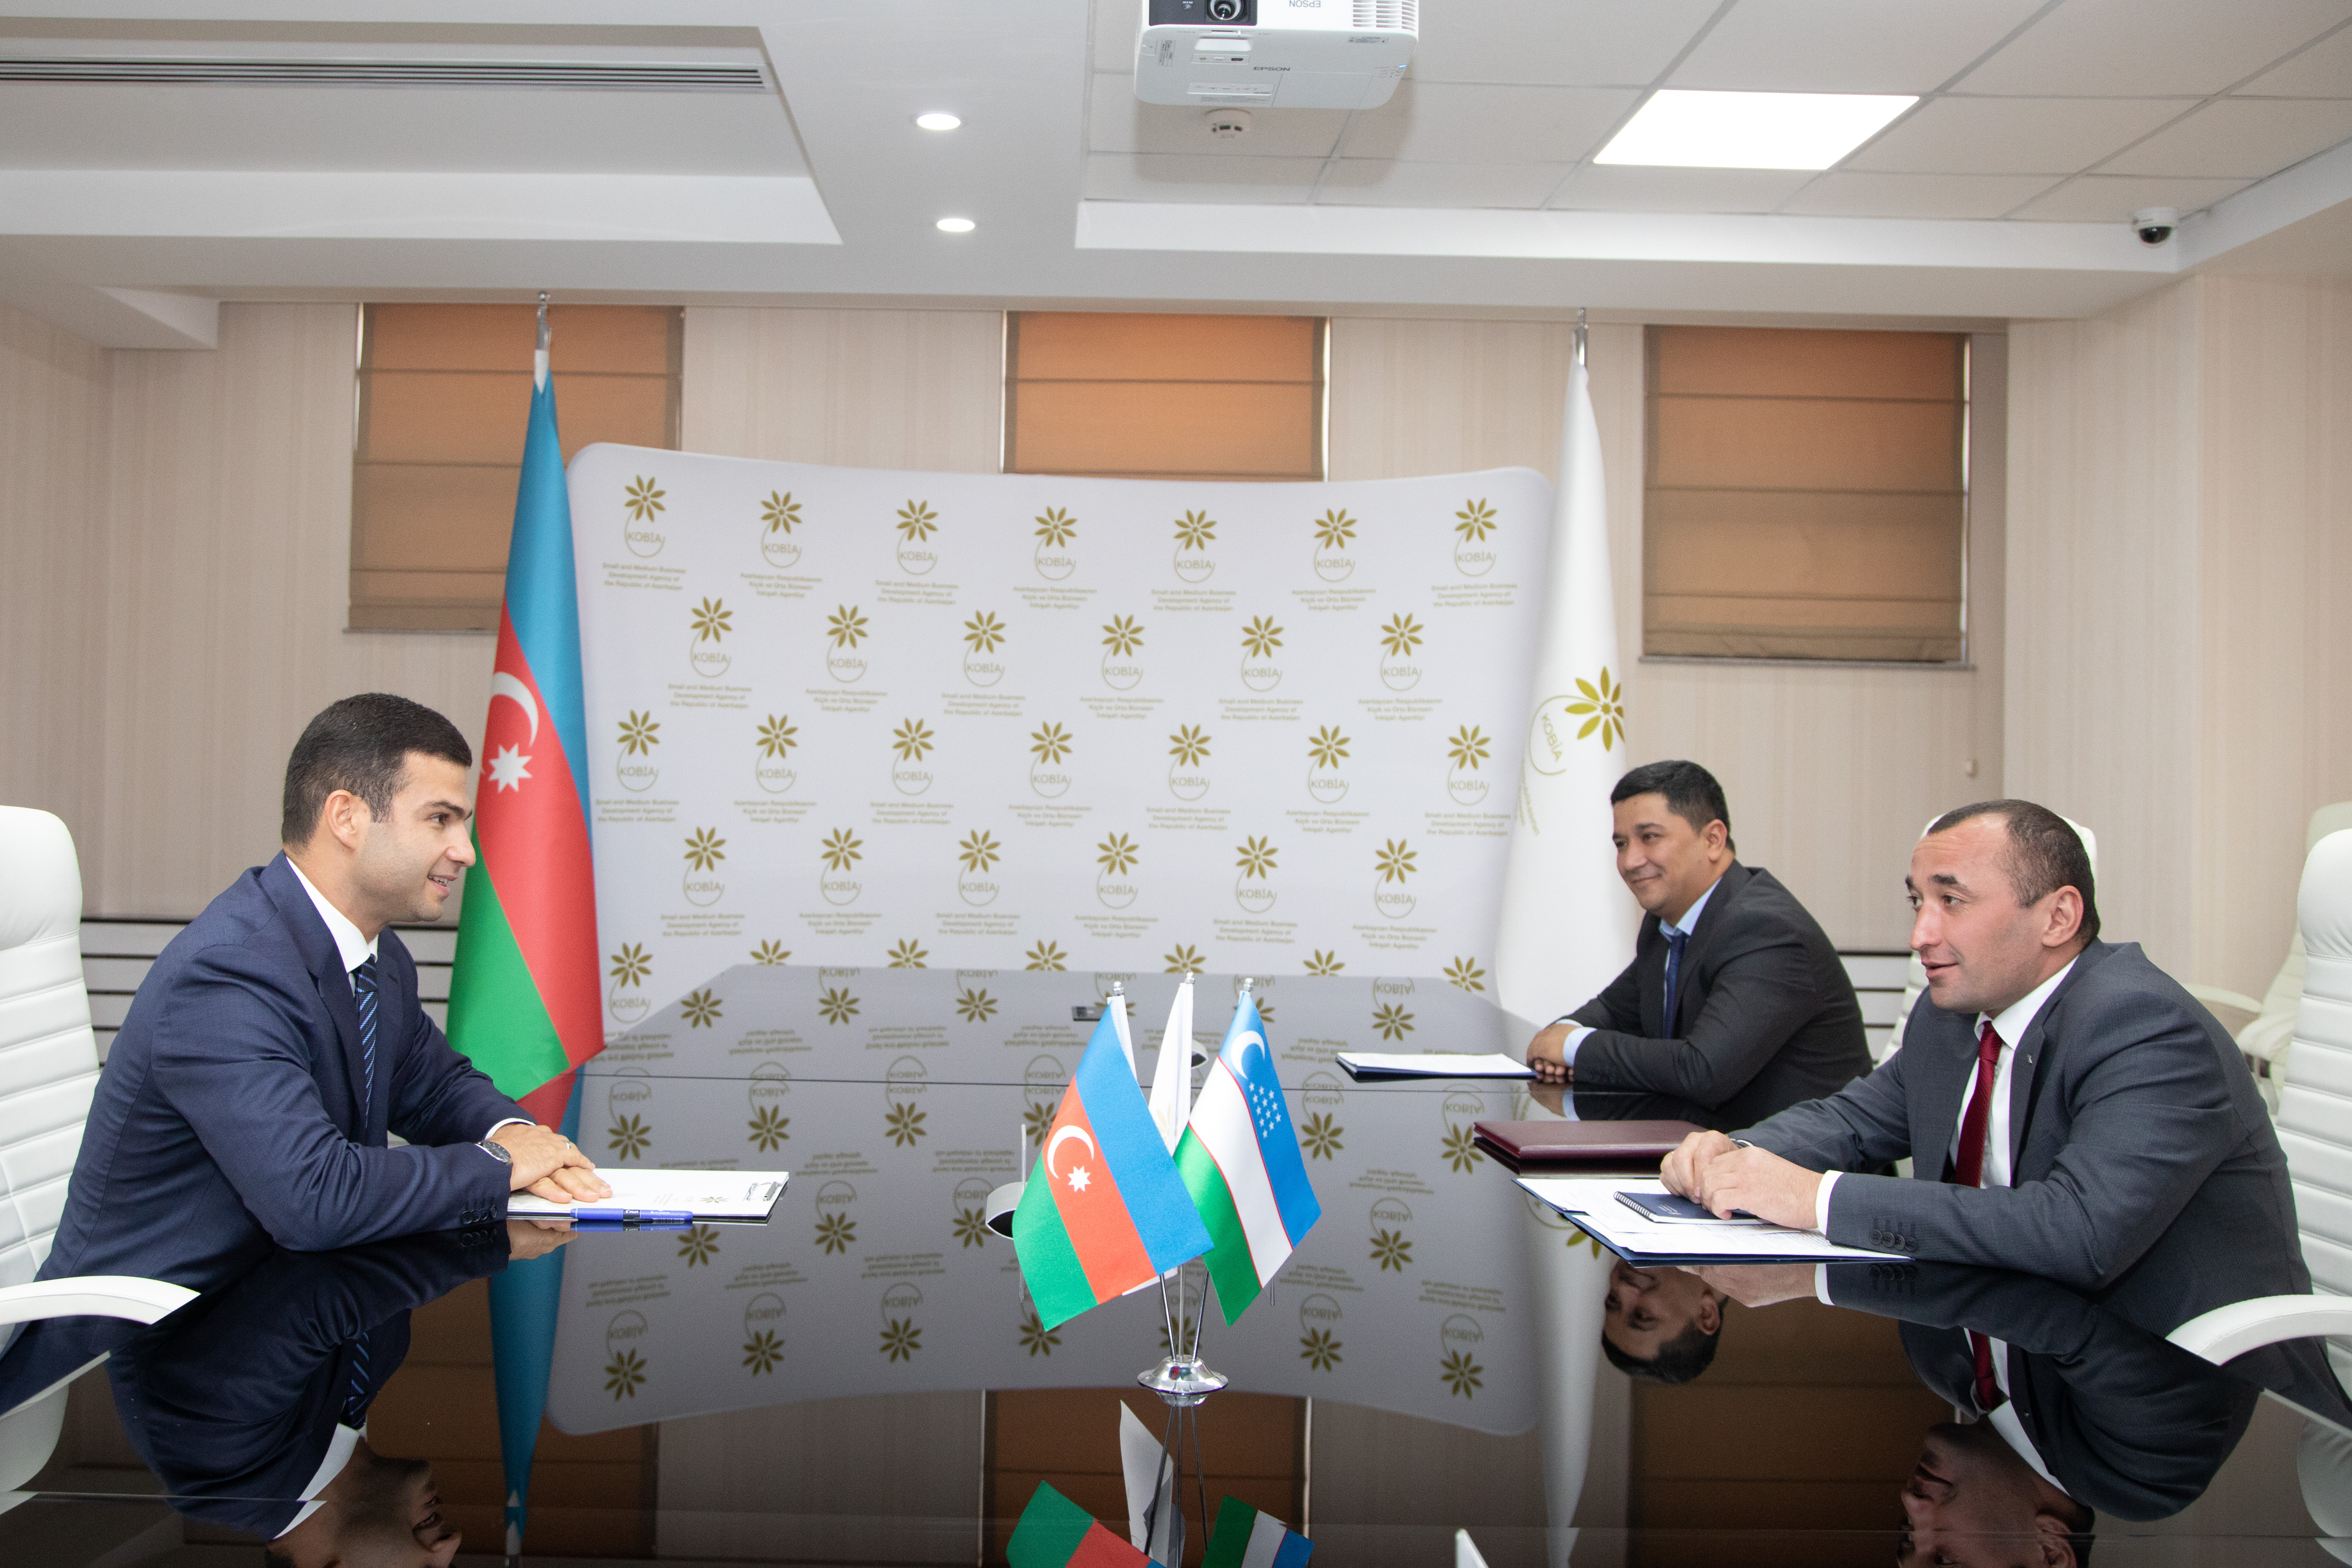 Representatives of the Entrepreneurship Development Agency of Uzbekistan visited KOBİA 